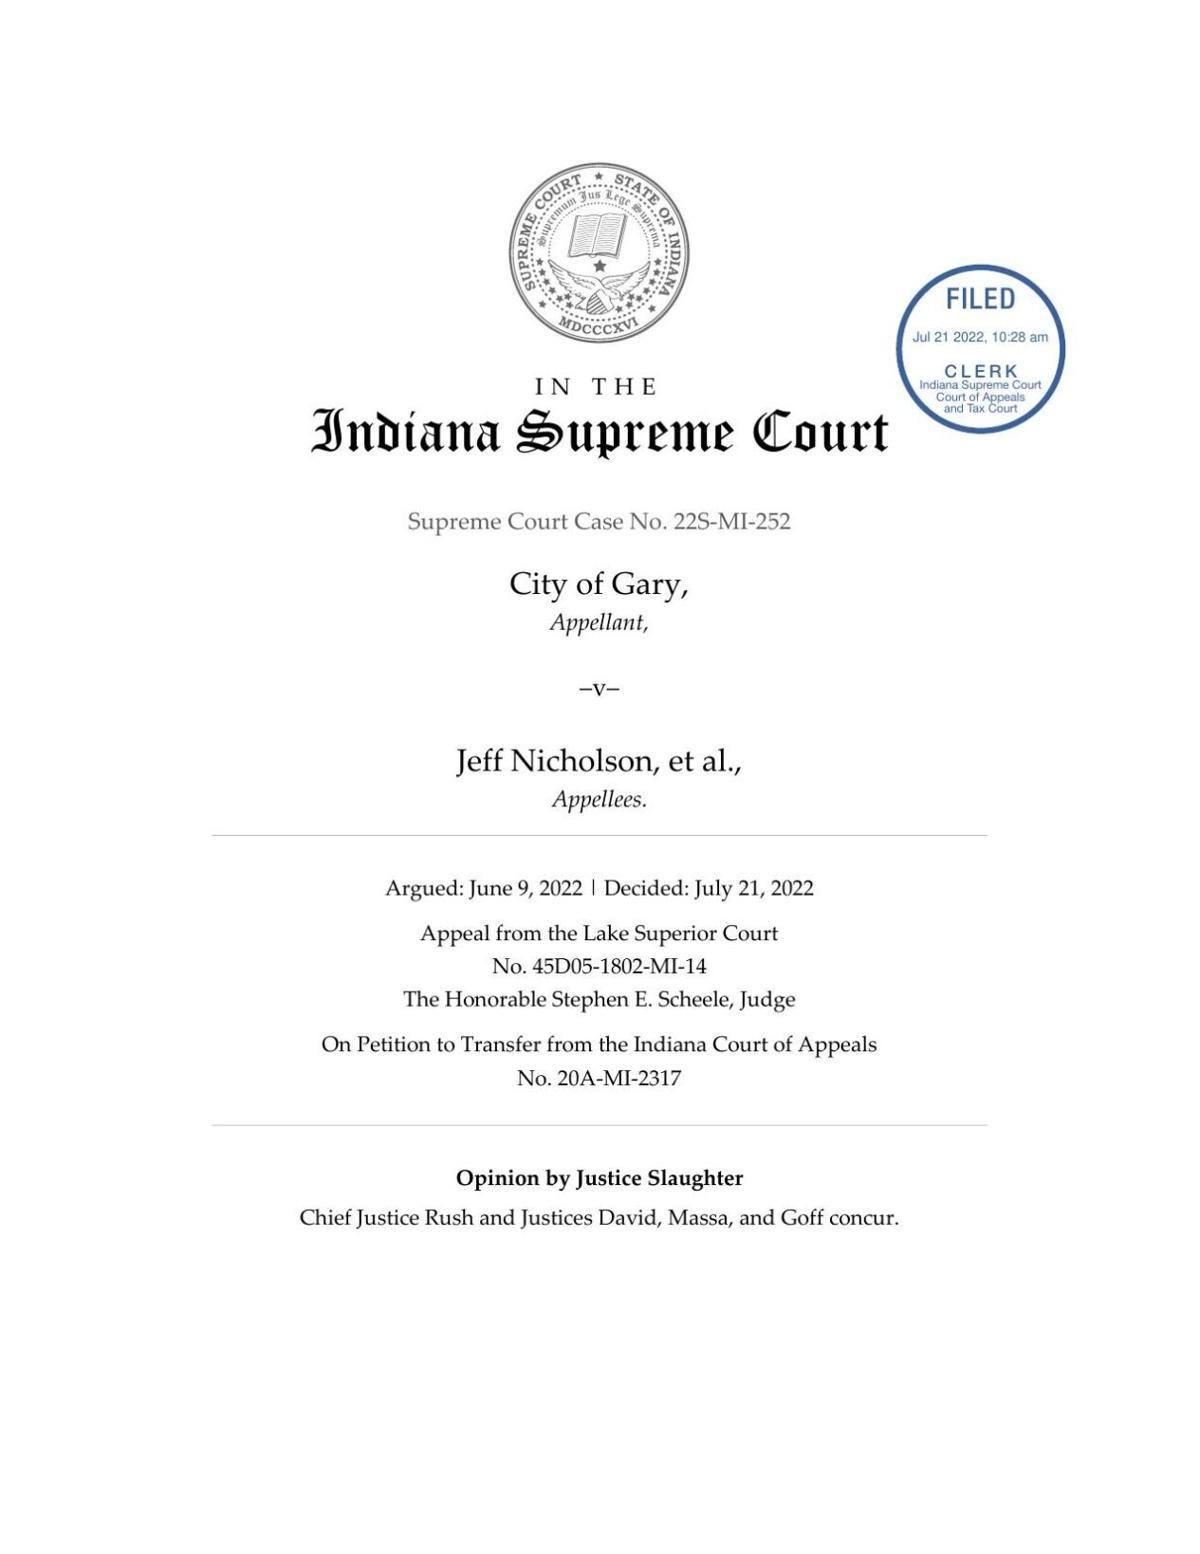 Gary v. Nicholson ruling of Indiana Supreme Court